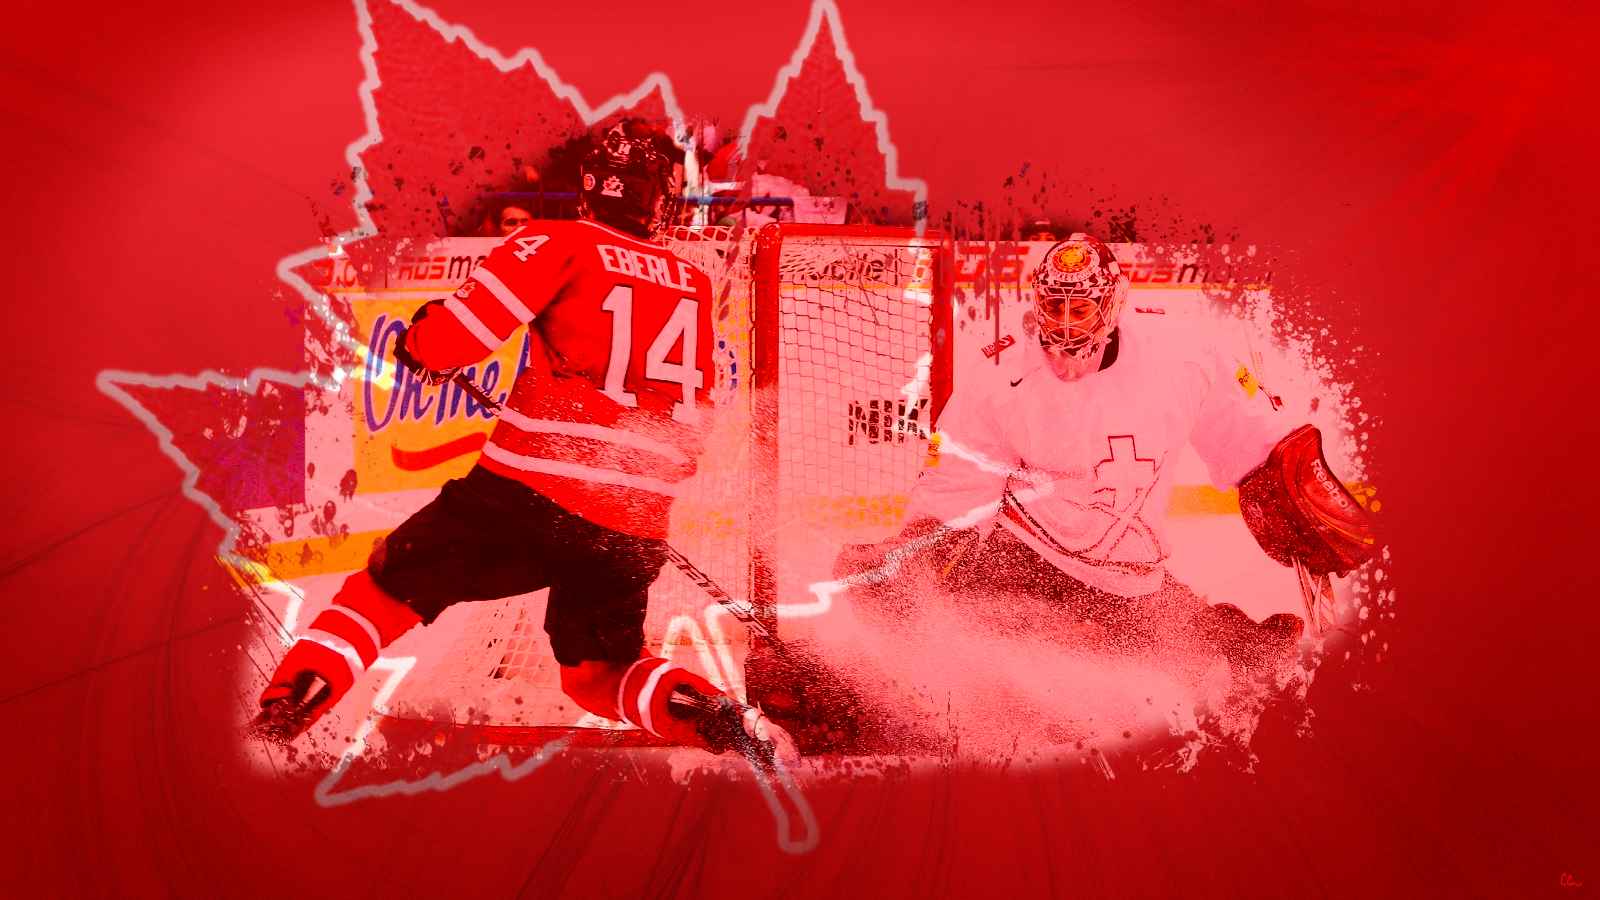 You Hate Eberle Canadianhockey Sens Oilers And Team Canada Last Edited